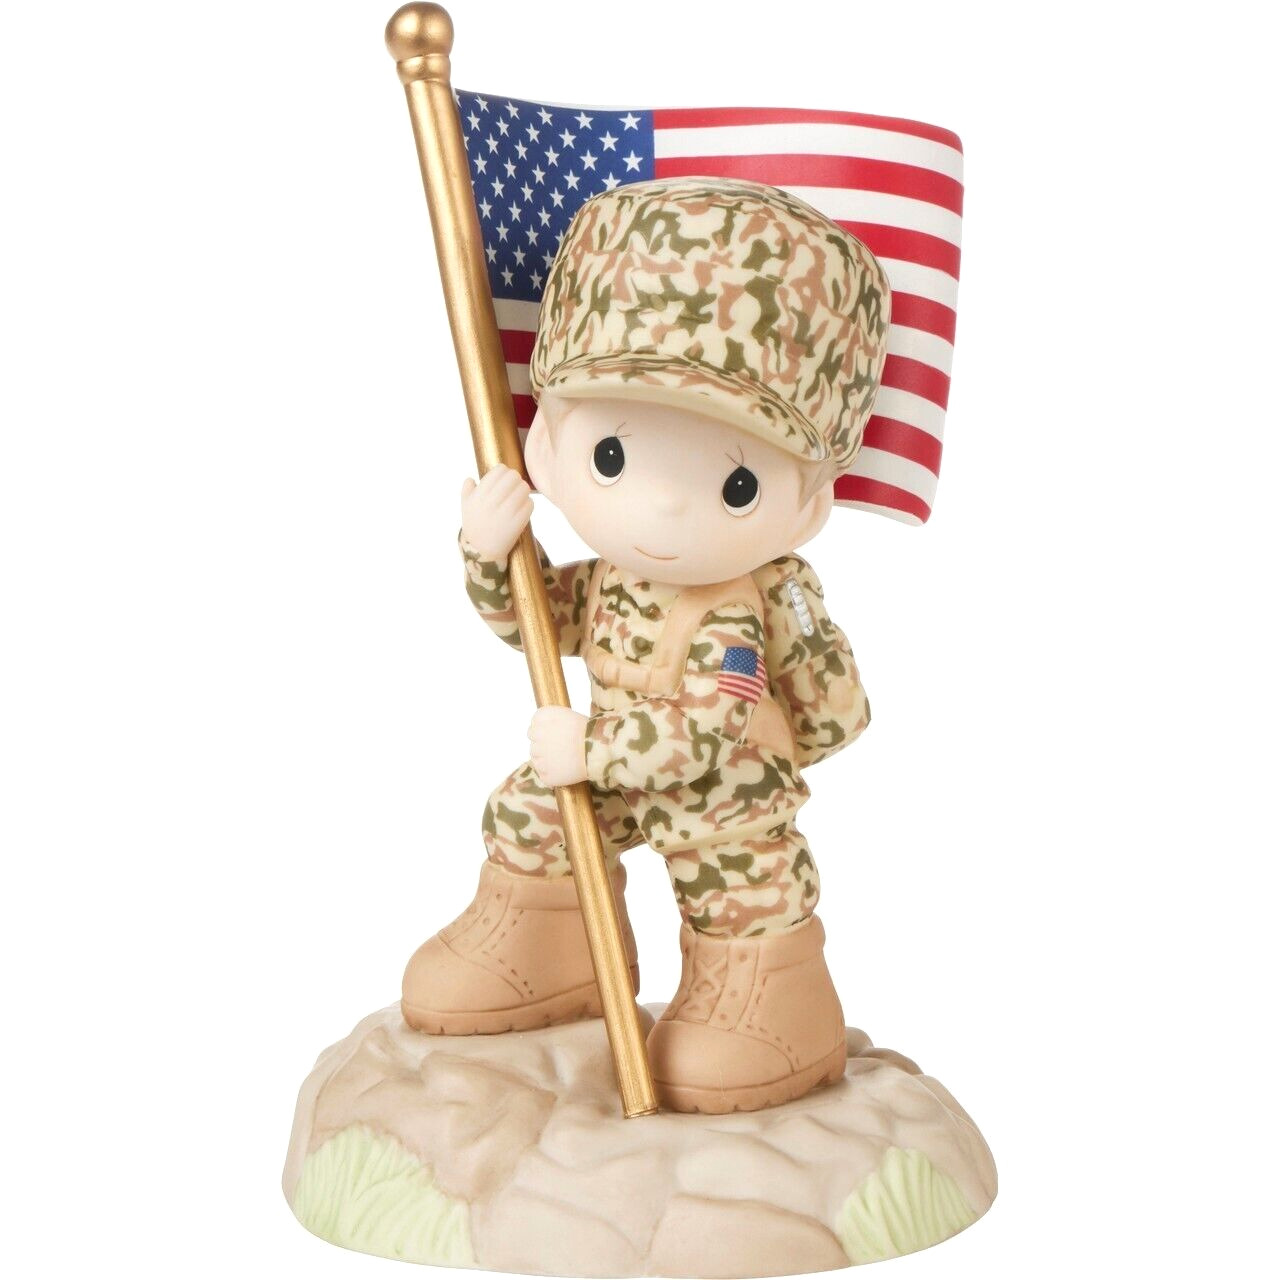 ✿ New PRECIOUS MOMENTS Figurine U.S. ARMY MILITARY SOLDIER American Boy 232018